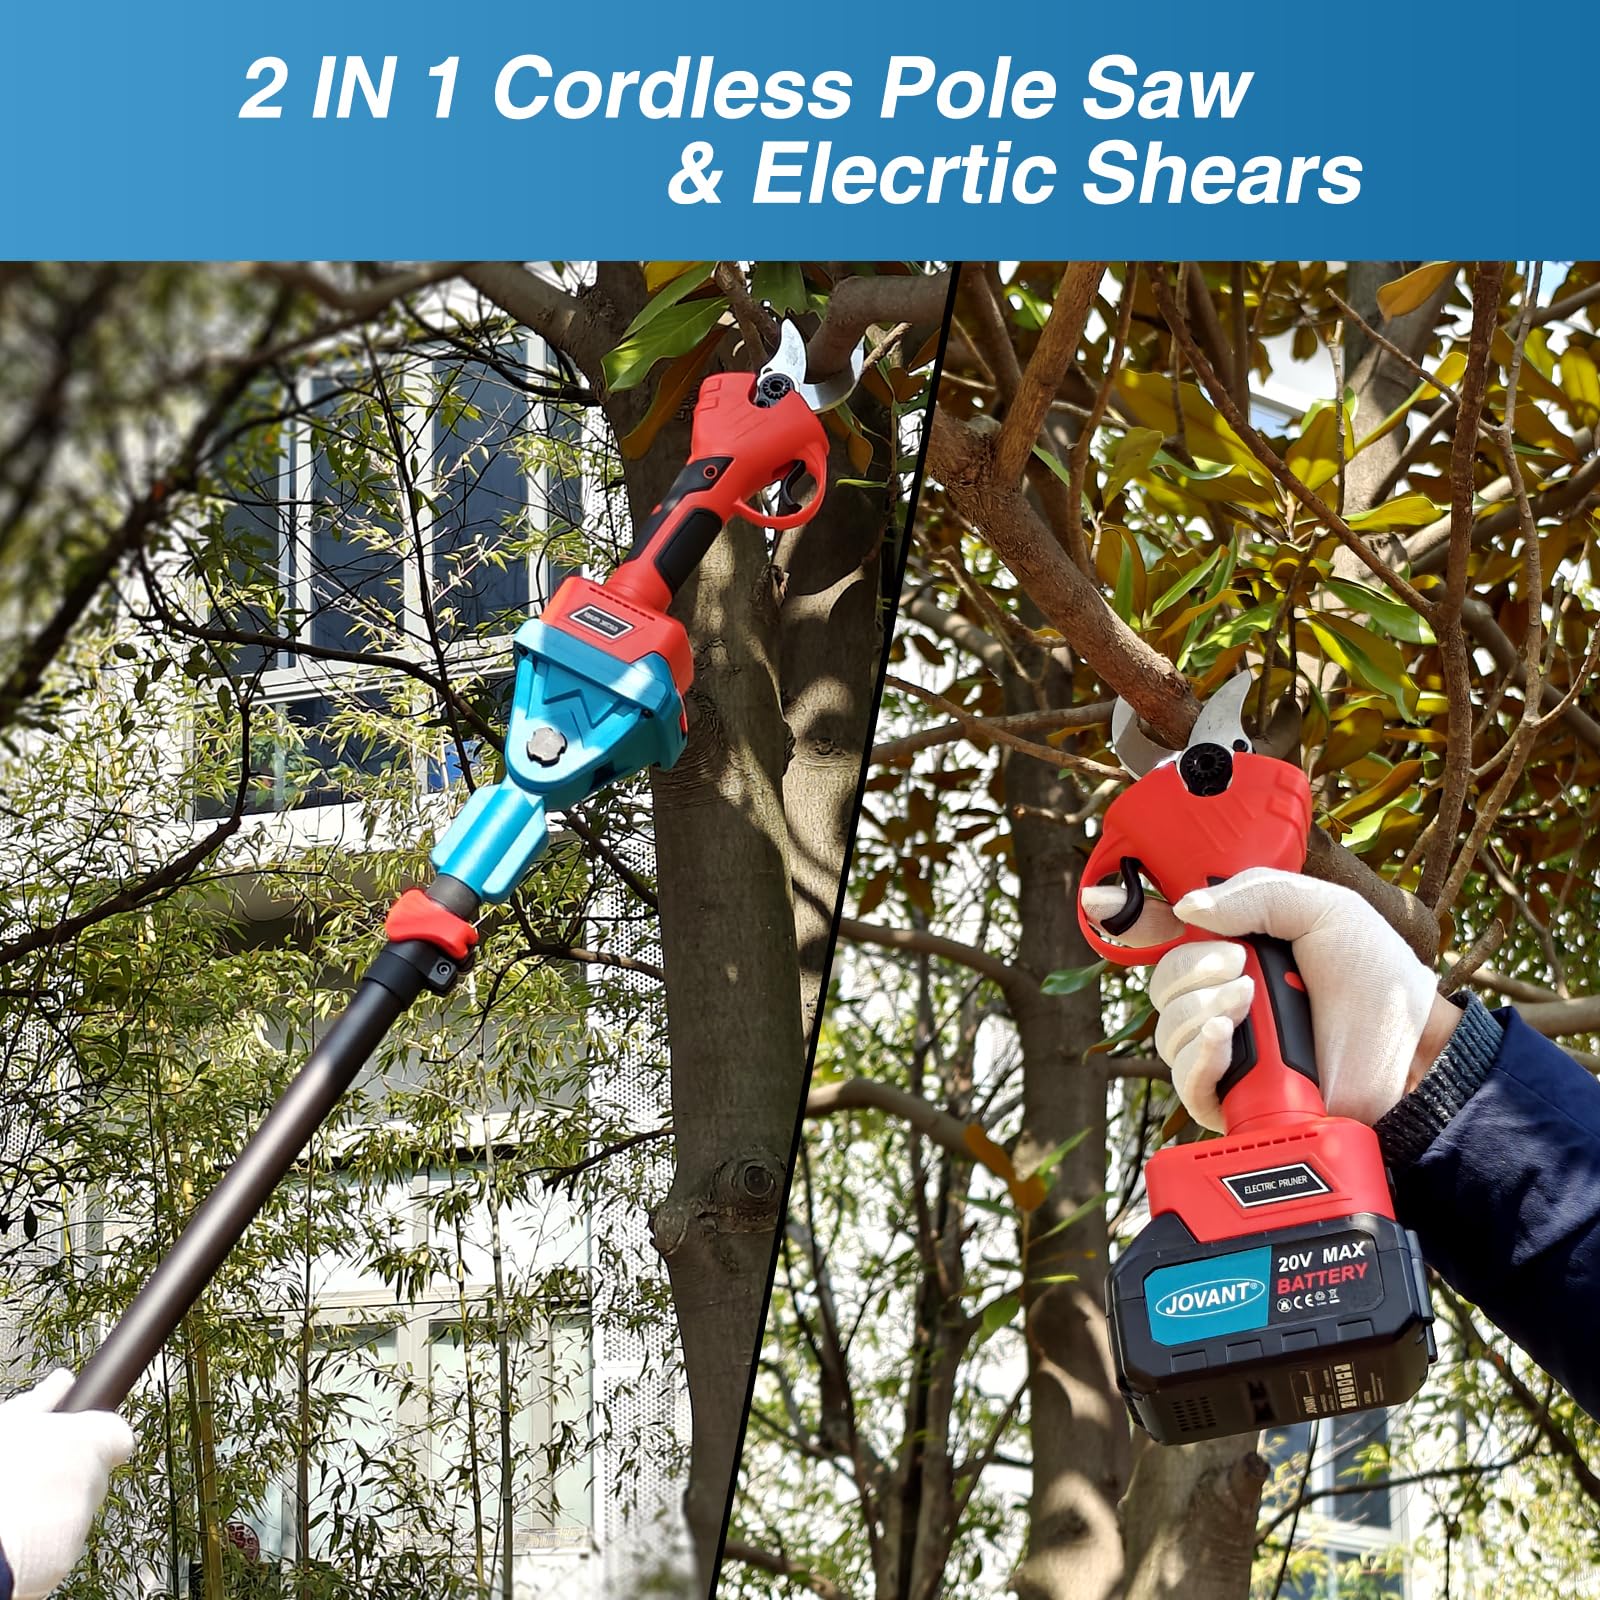 2 IN 1 Cordless Pole Saw & Elecrtic Shears